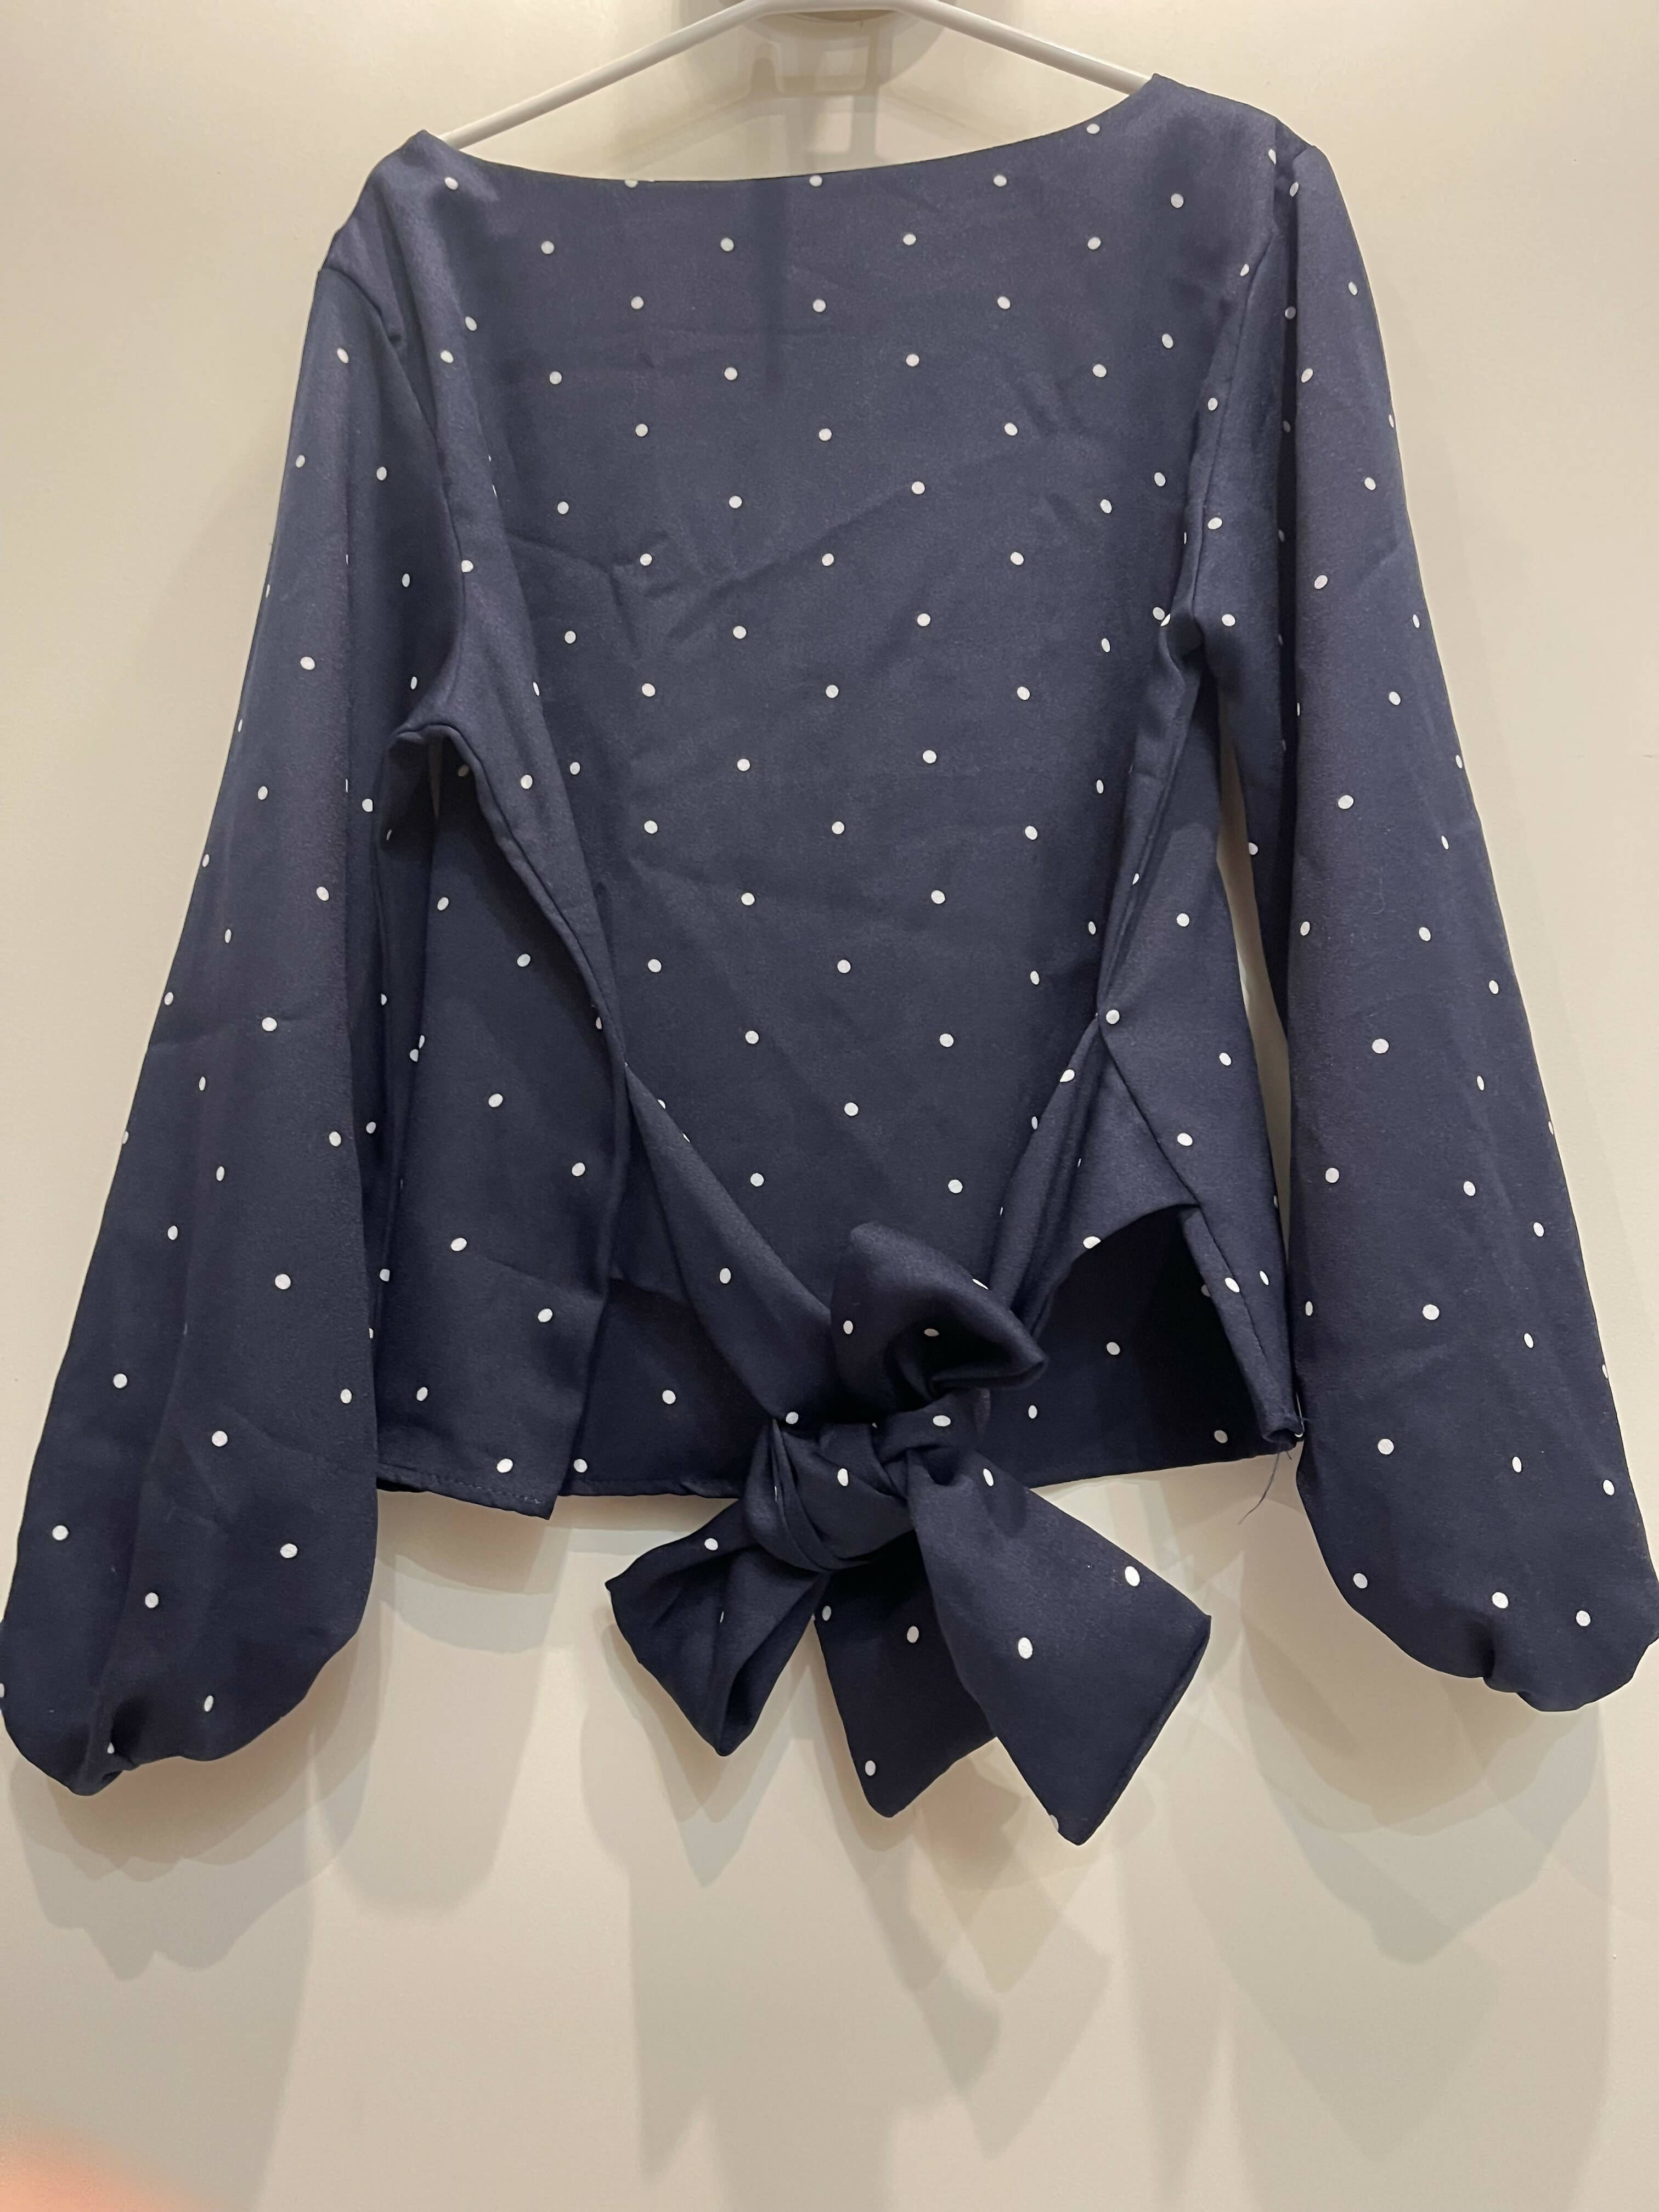 Western polka dot navy blue shirt (Size: S ) | Women Tops & Shirts | New